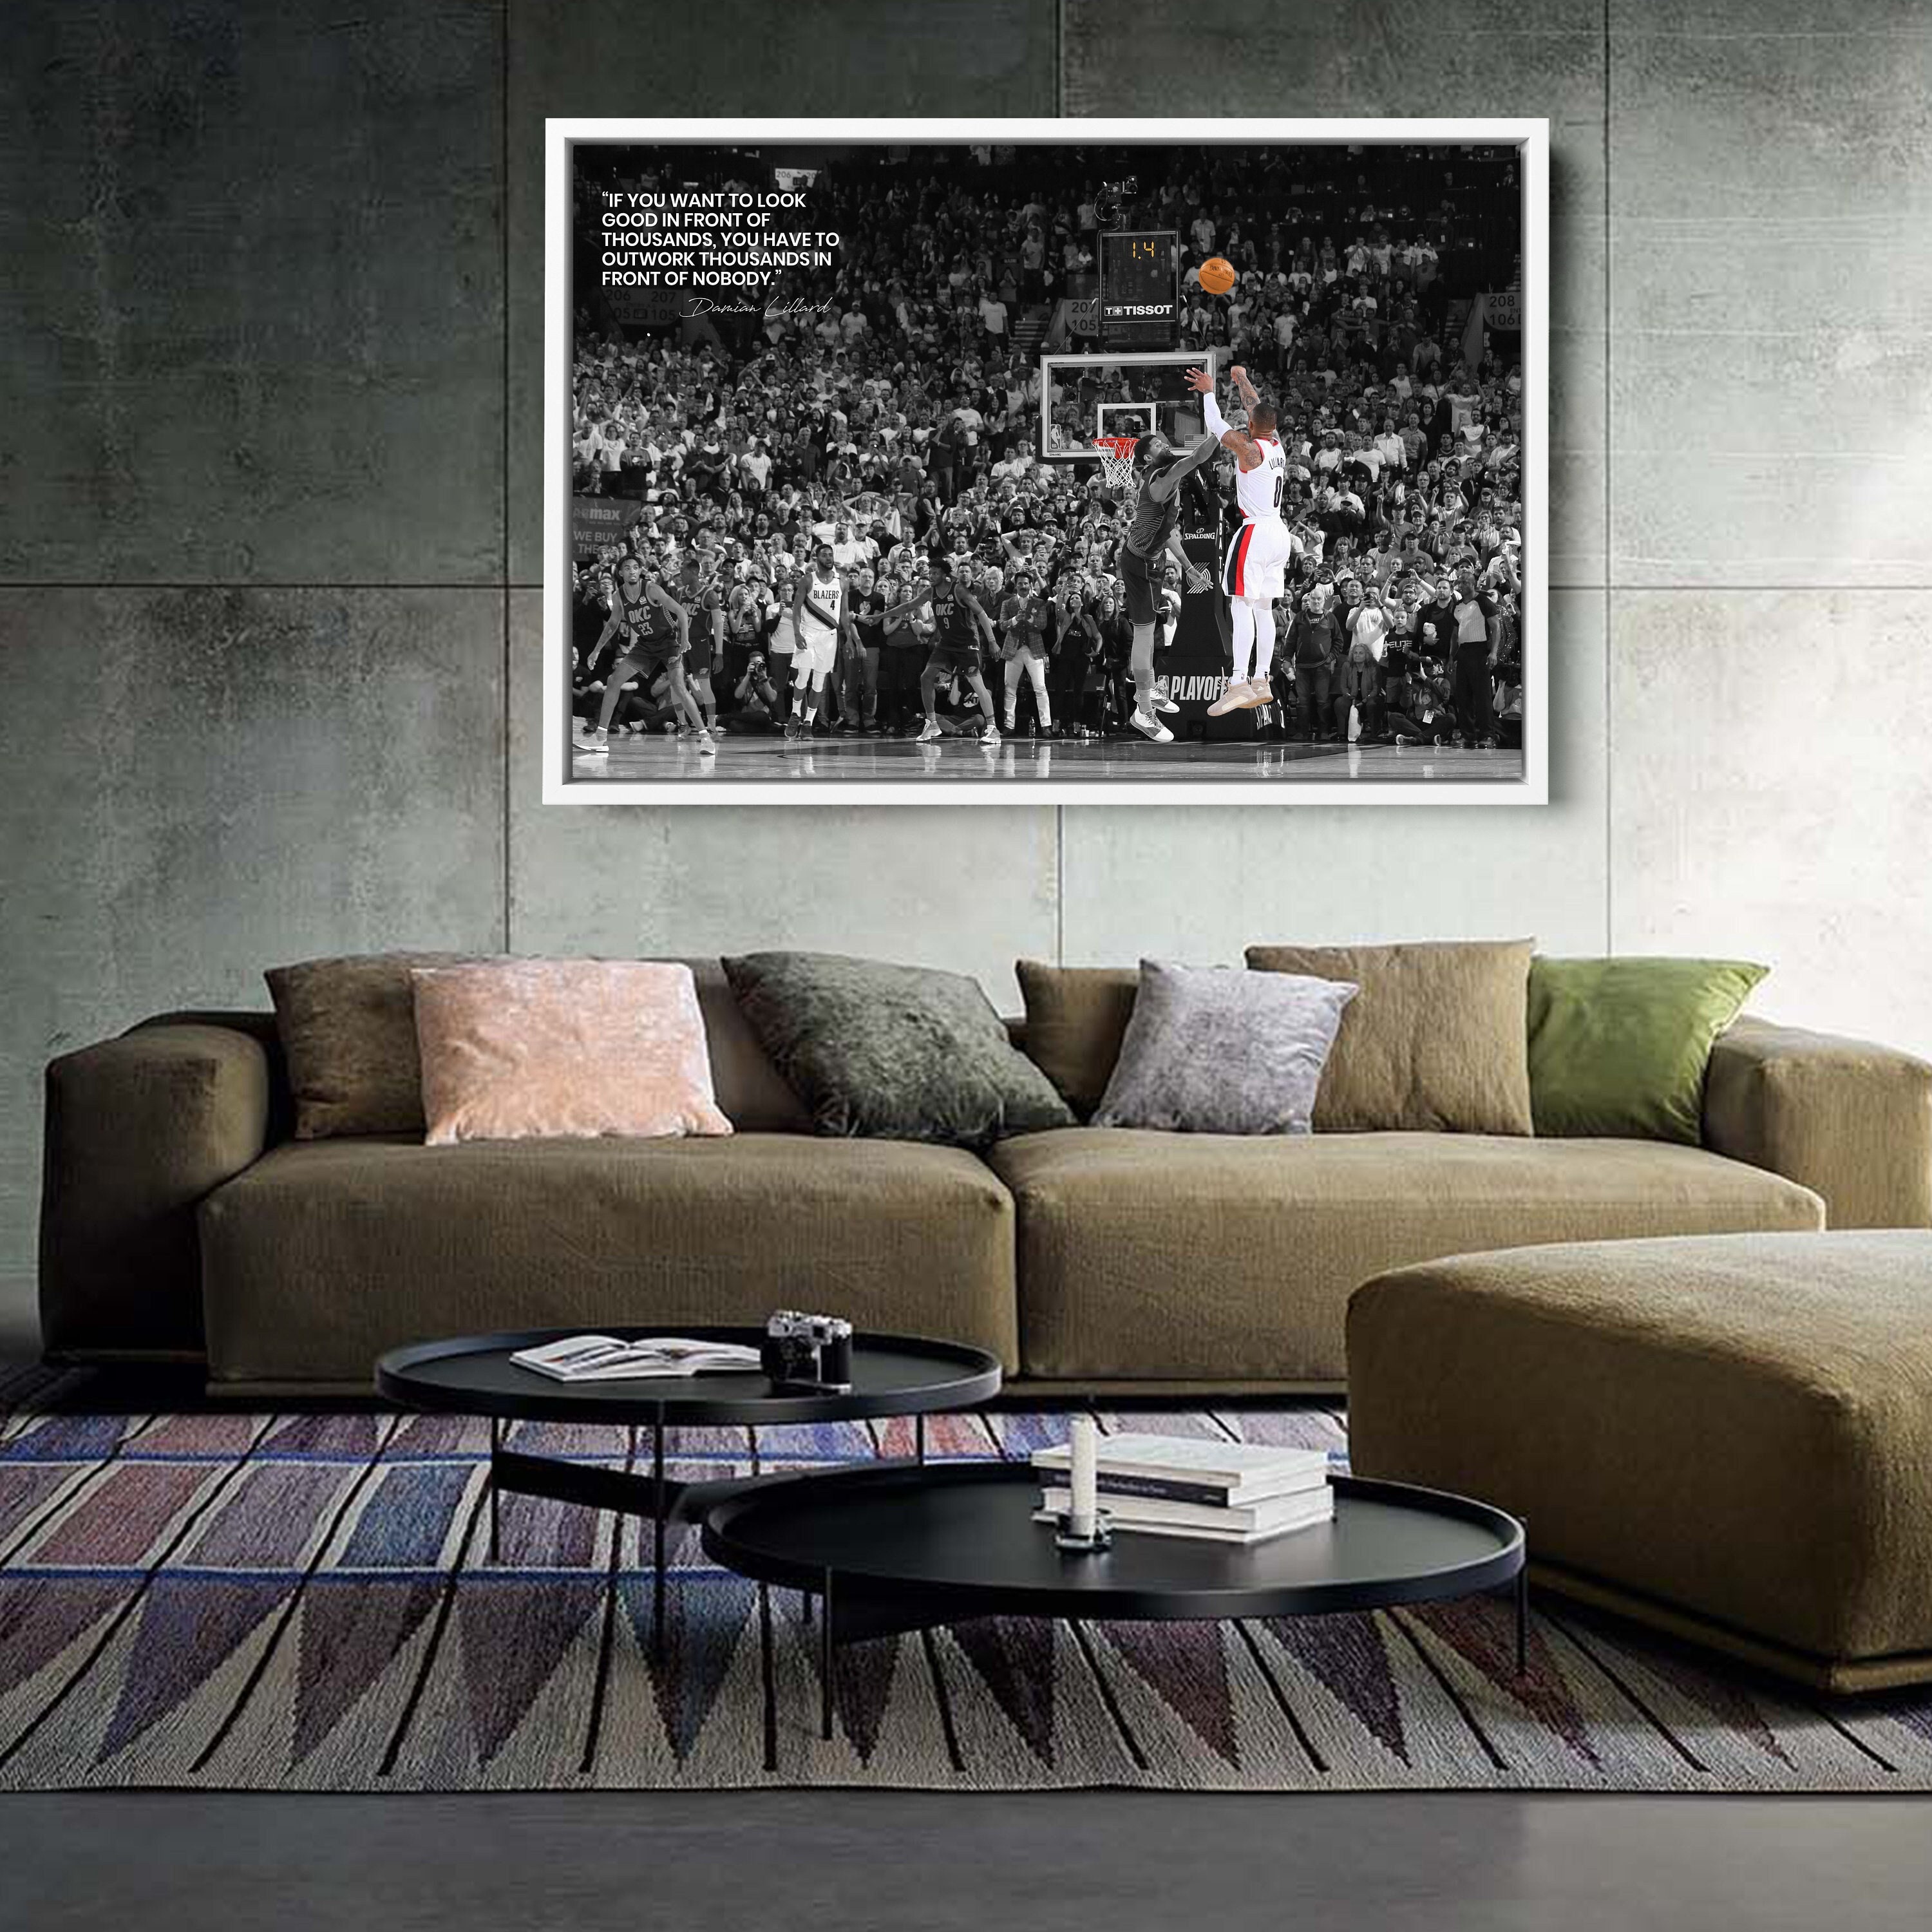  shitou Damian Lillard Poster Basketball Picture Canvas